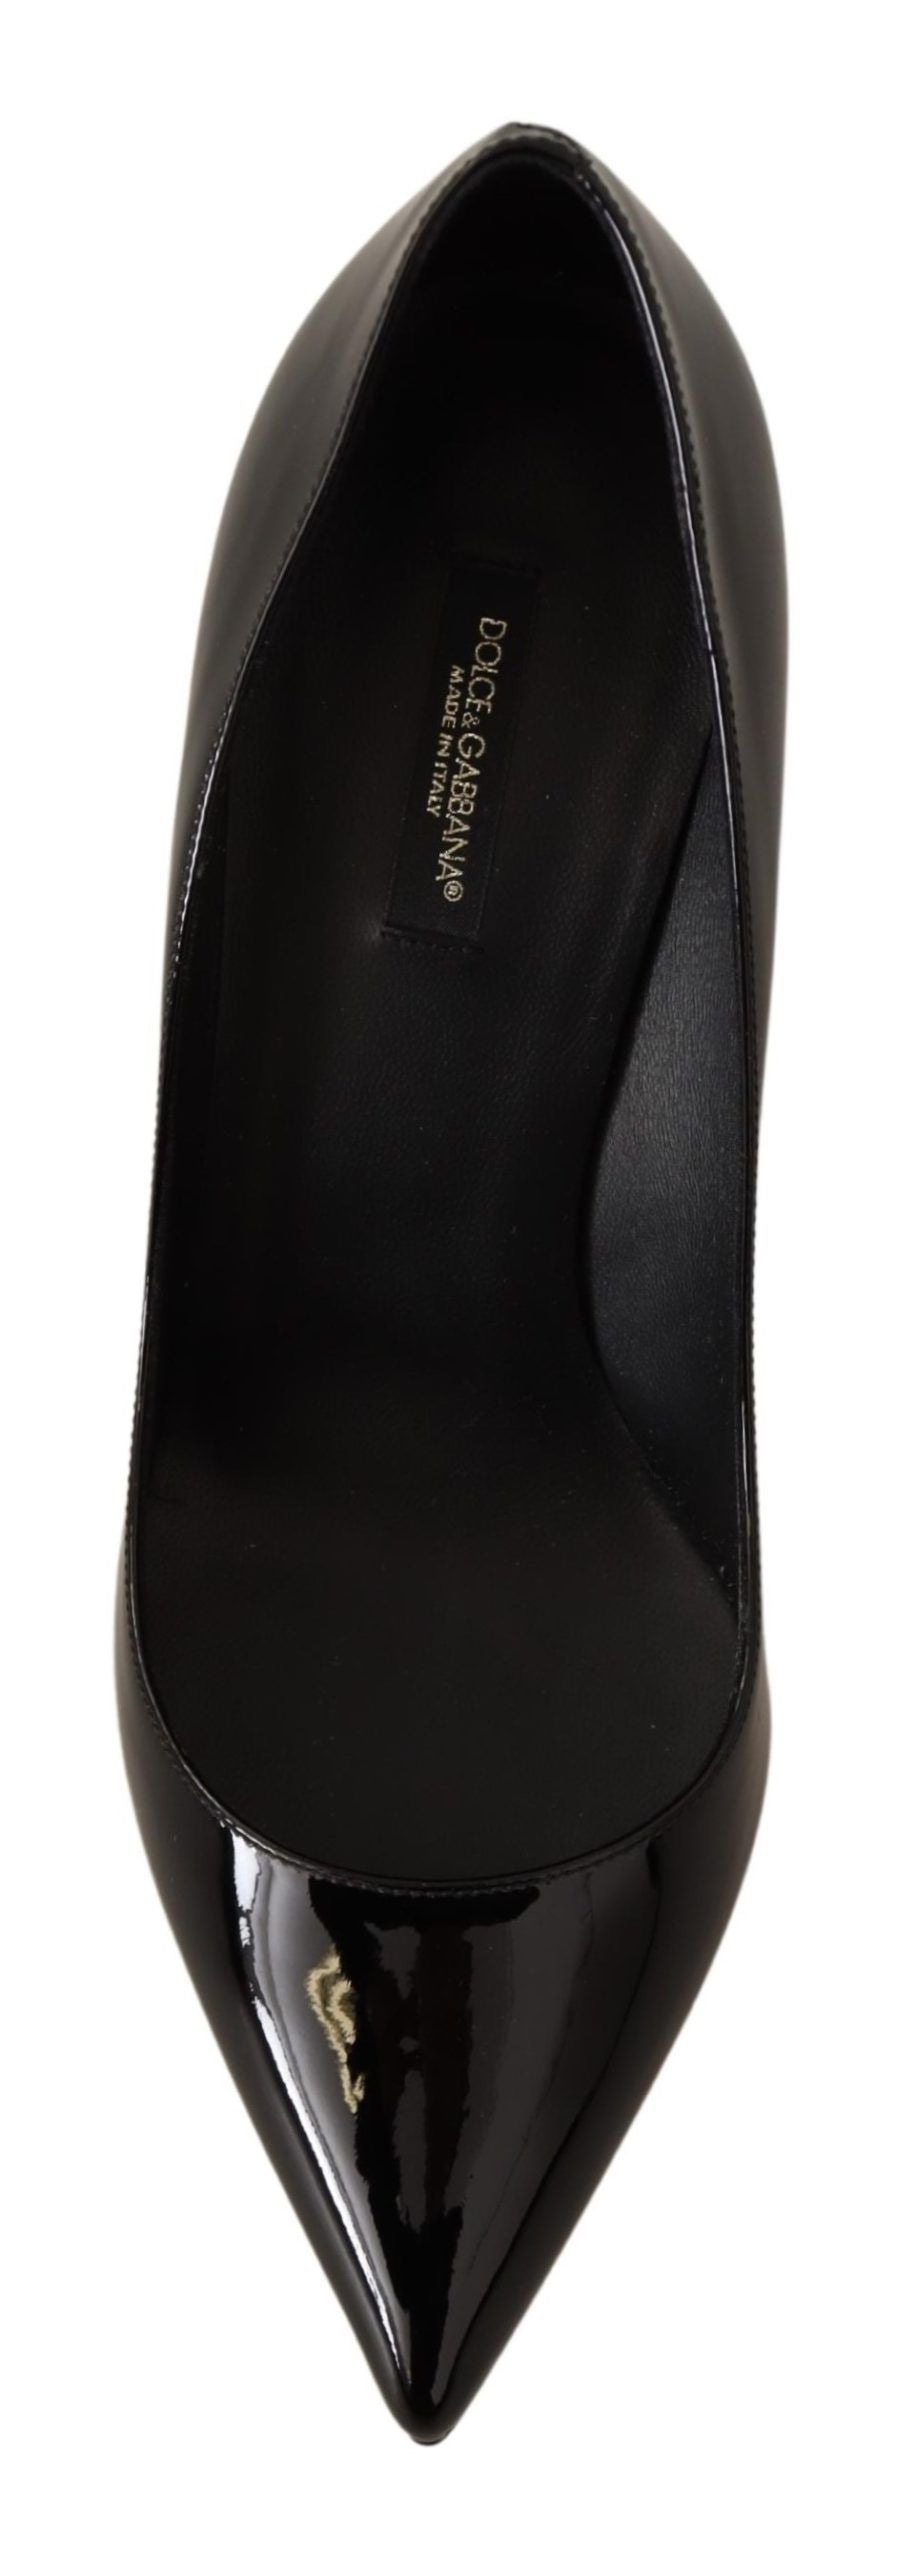 Elegant Black Patent Leather Stiletto Pumps